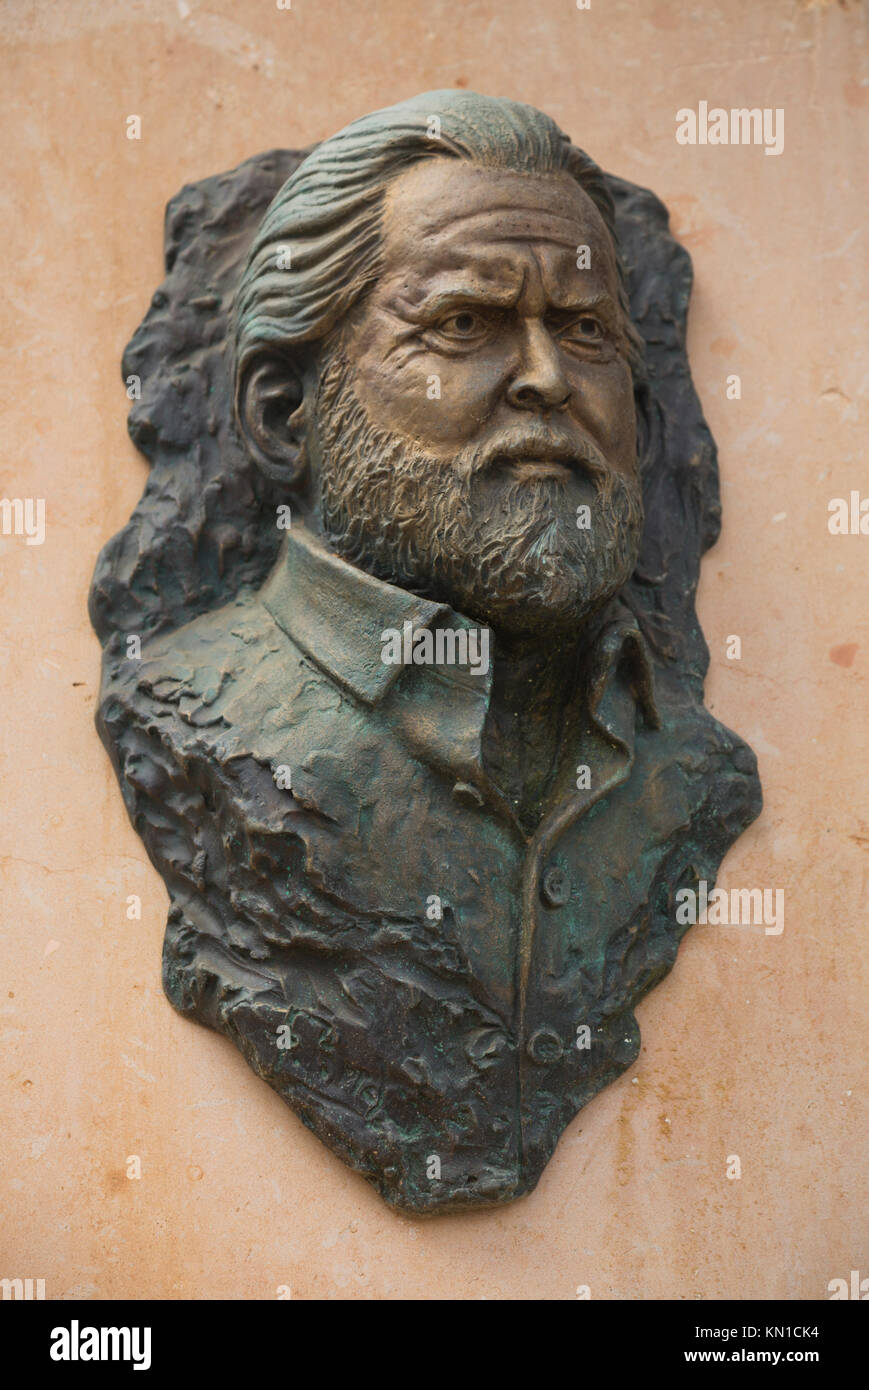 Orson Welles sculpture in Paseo Blas Infante, Ronda, Spain Stock Photo